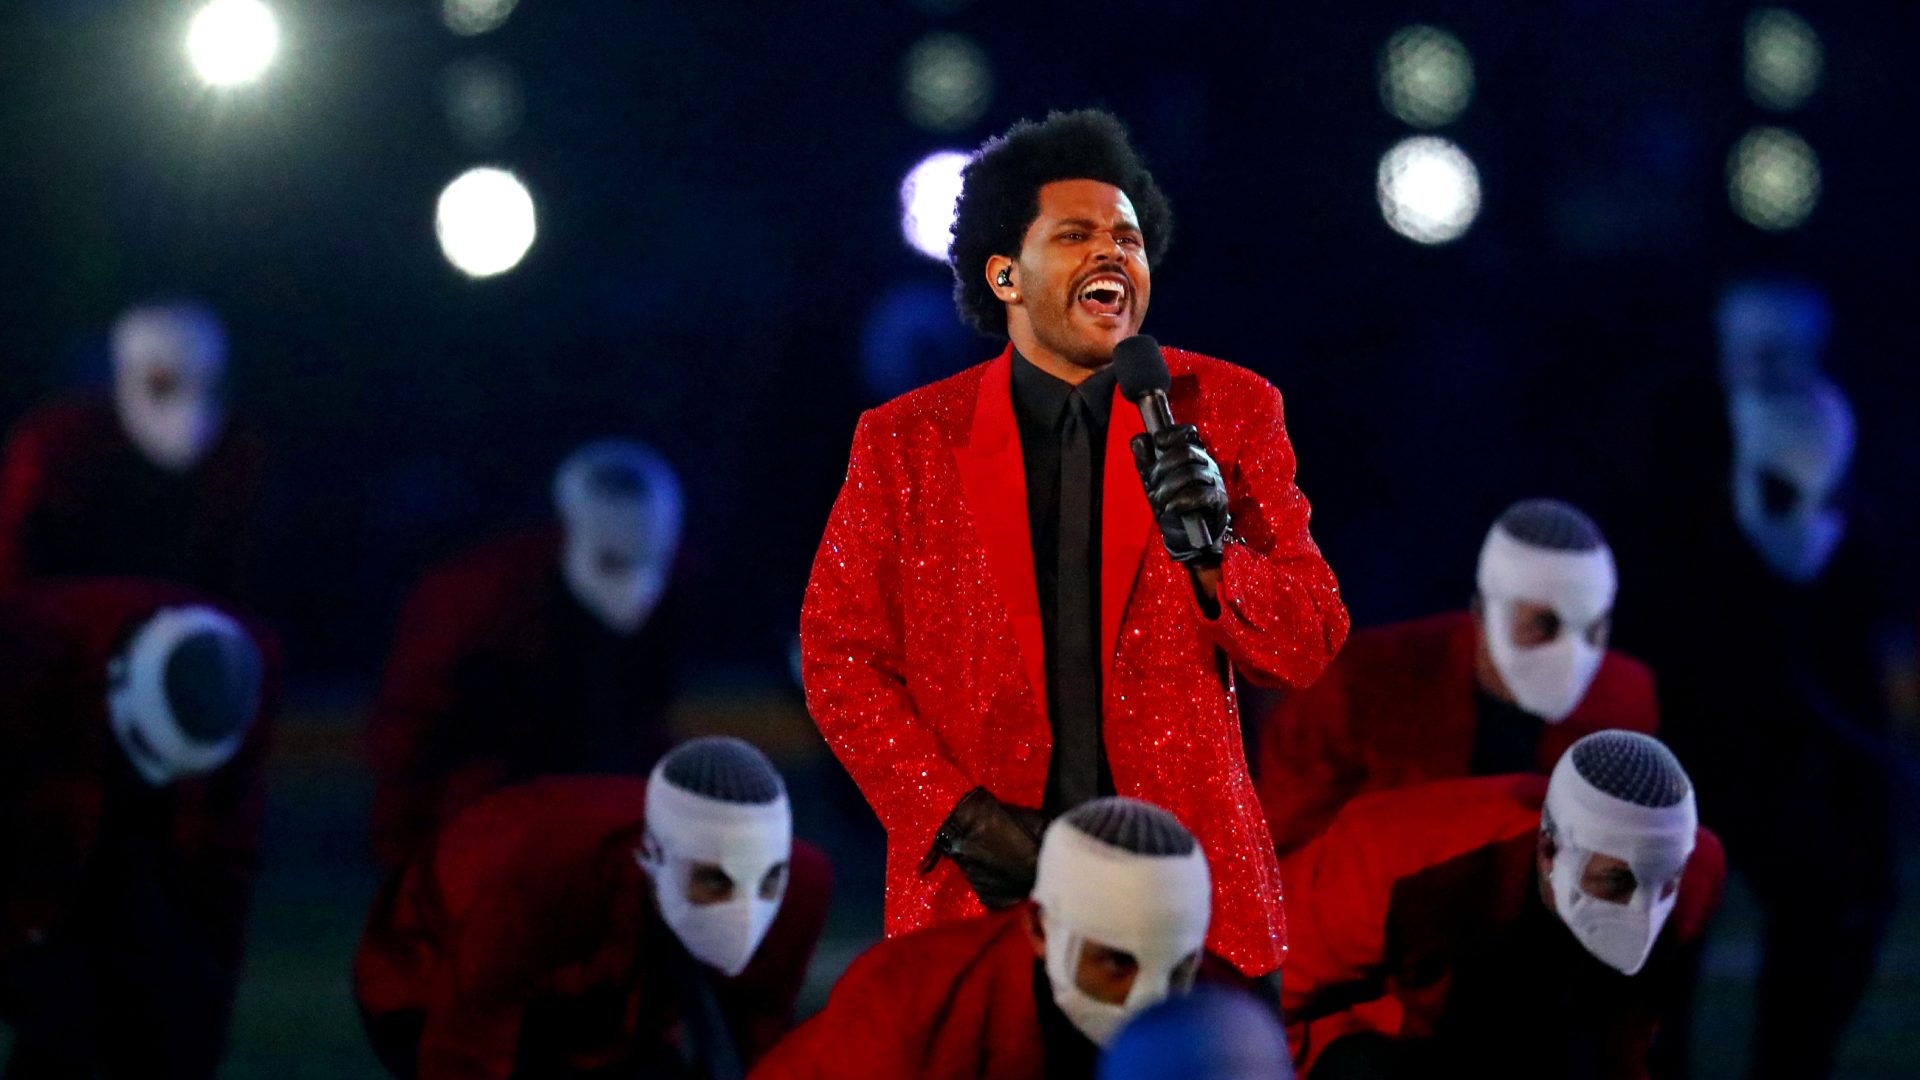 NFL The Weeknd brings bright lights, bandaged dancers to Super Bowl